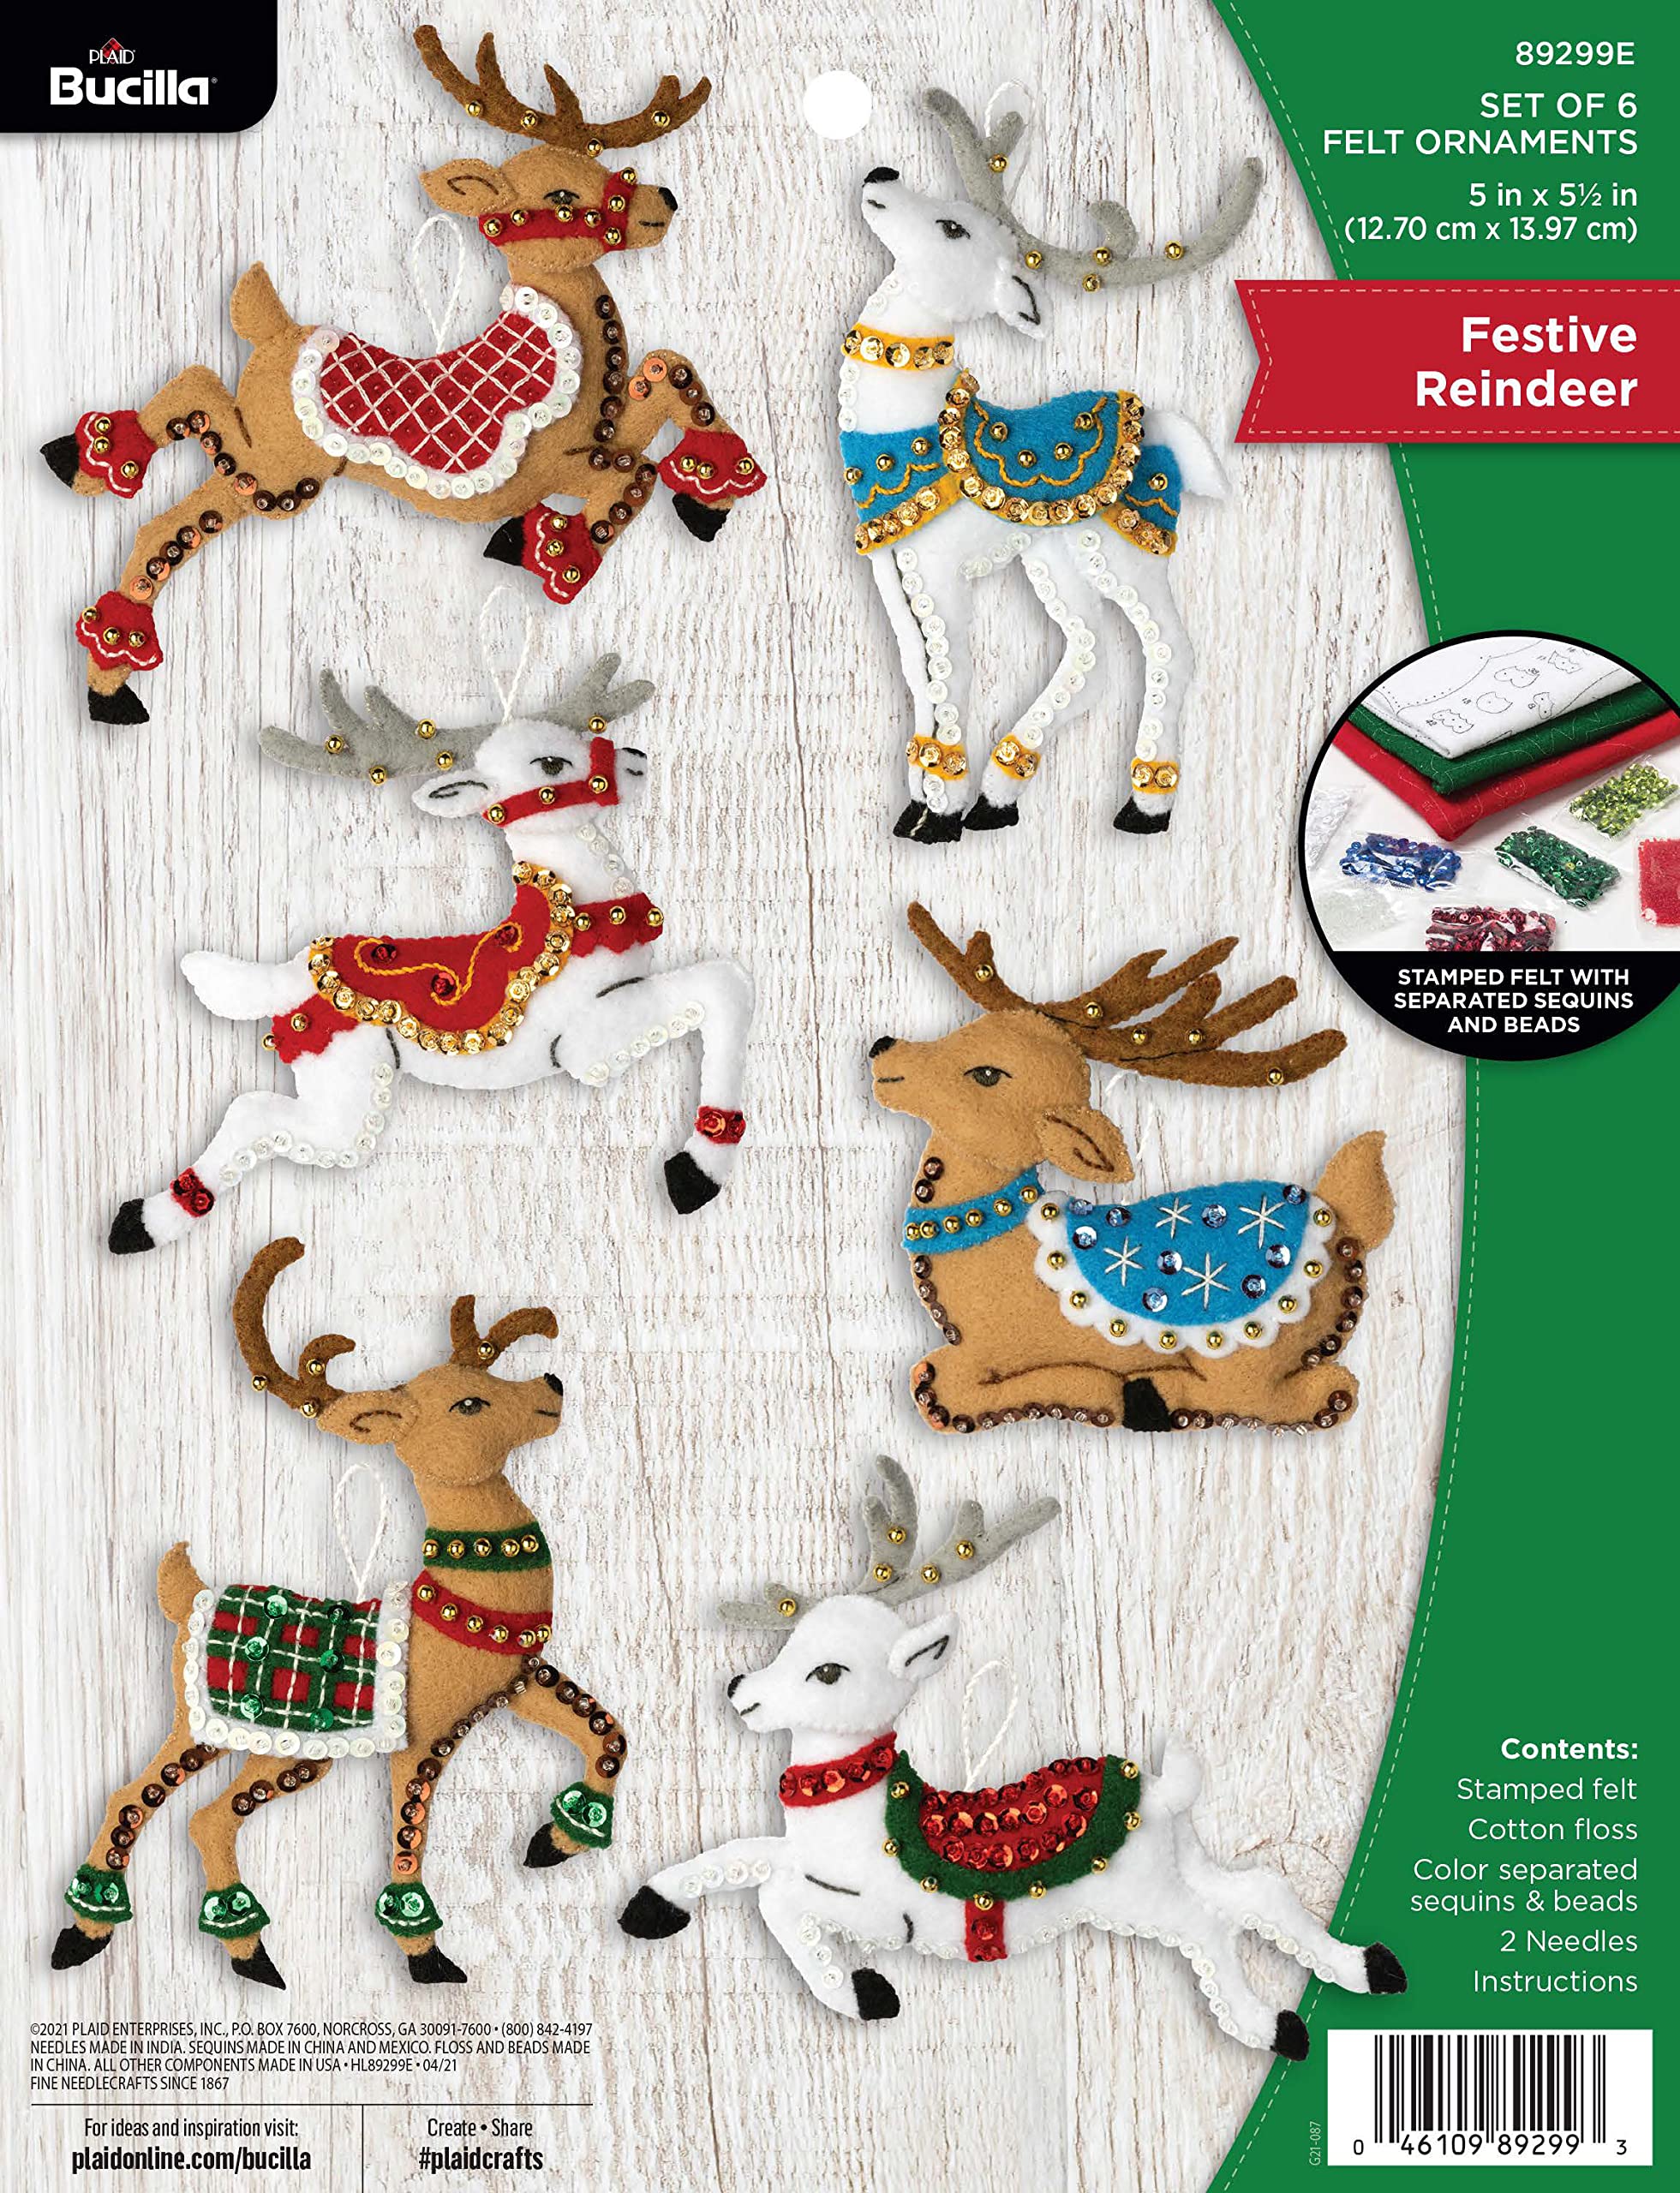 Felt Ornaments - Festive Reindeer